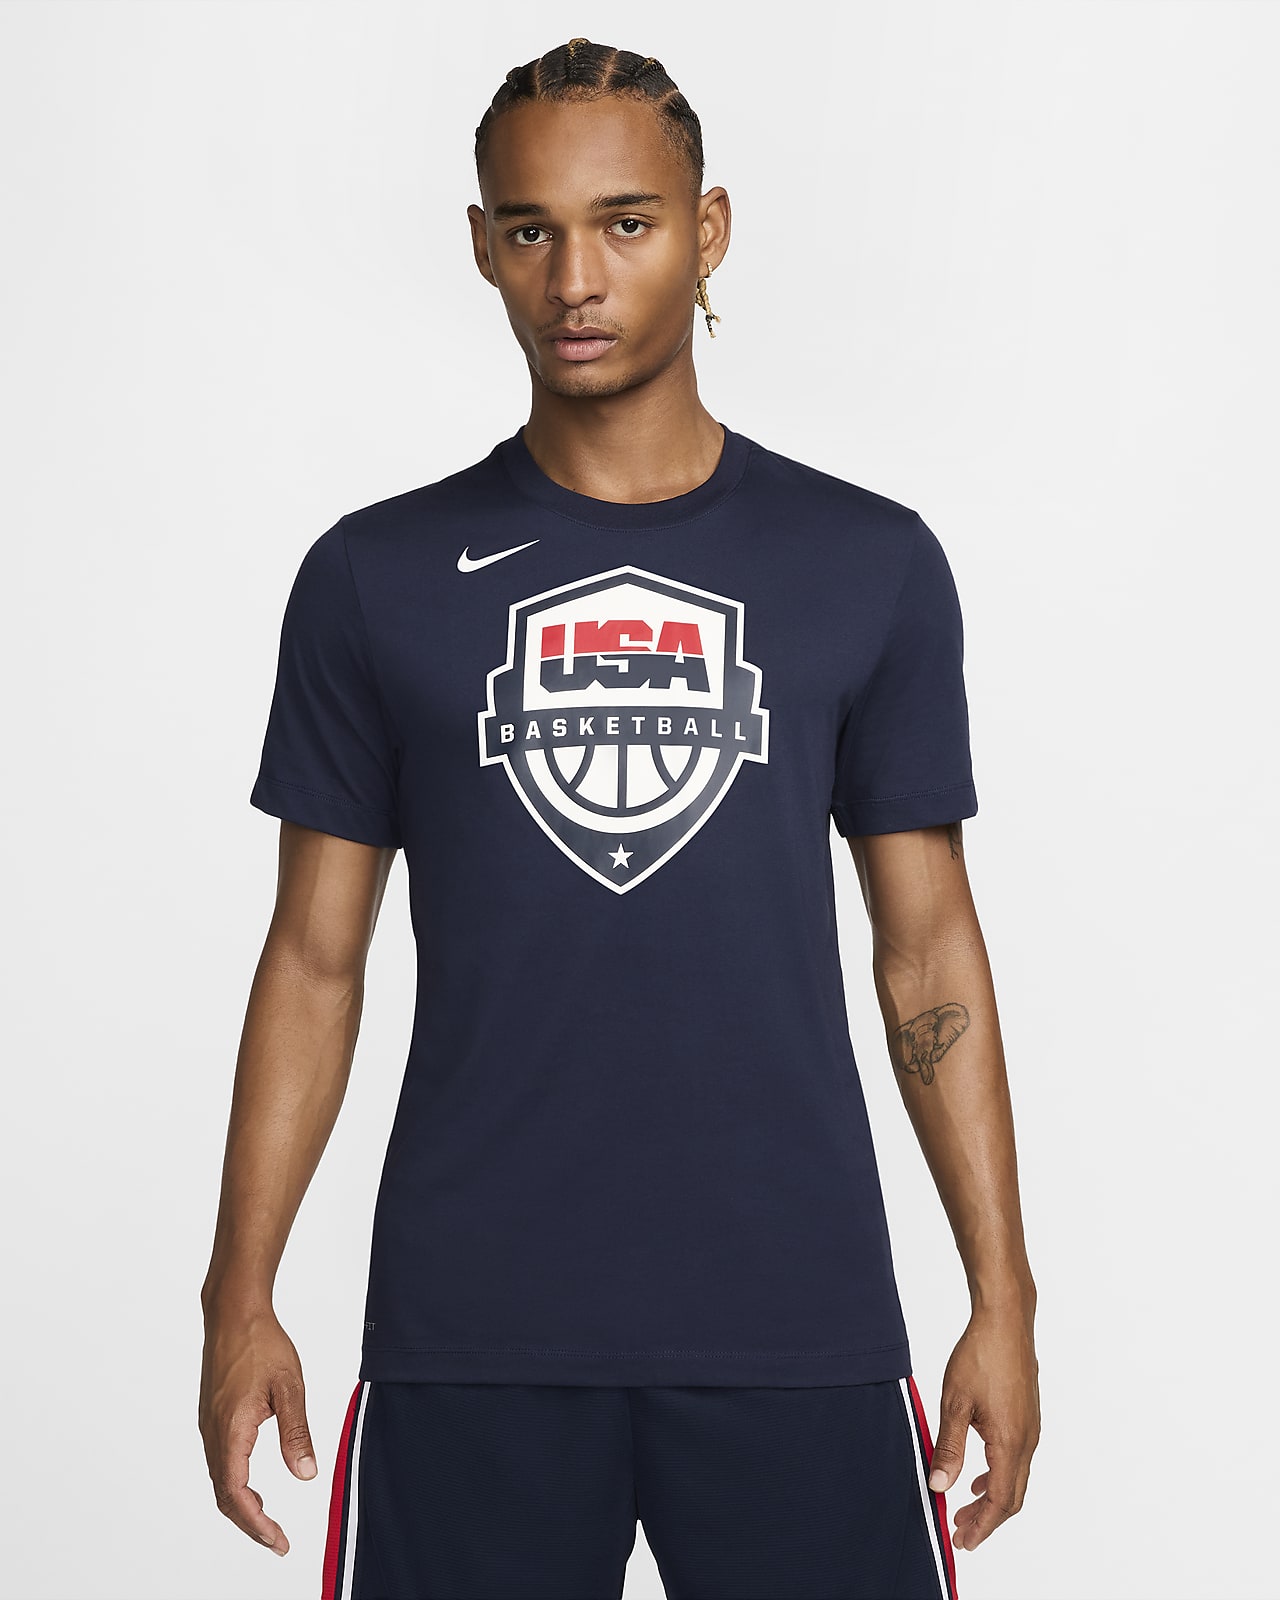 USAB Nike Dri-FIT basketbalshirt voor heren